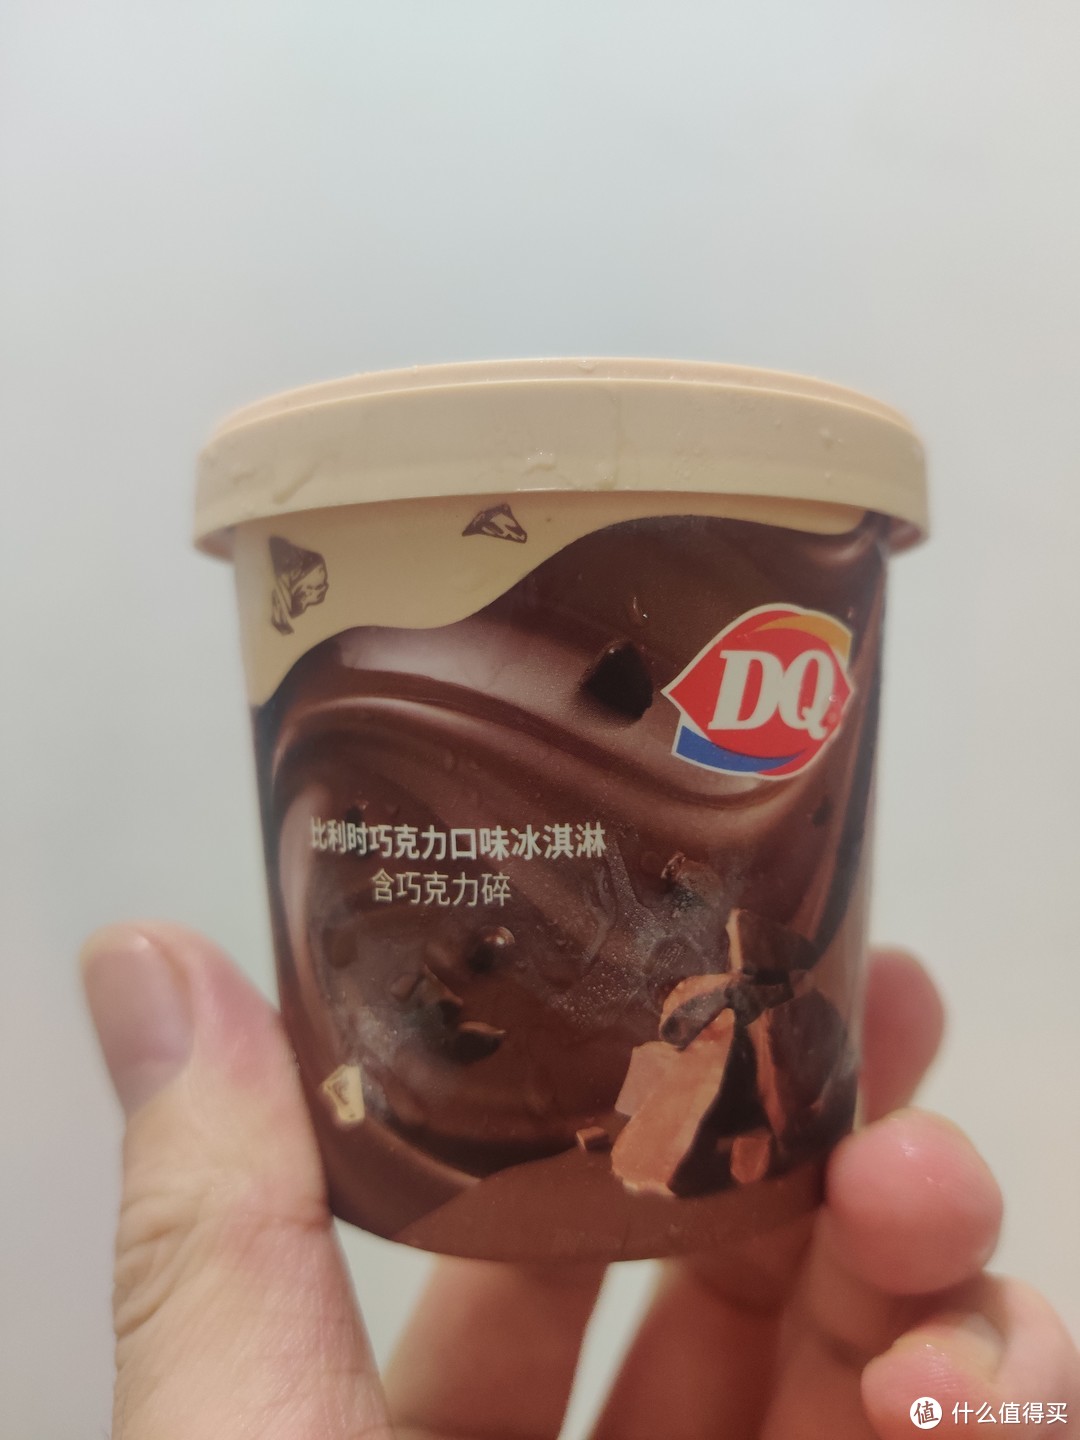 DQ 巧克力冰淇淋